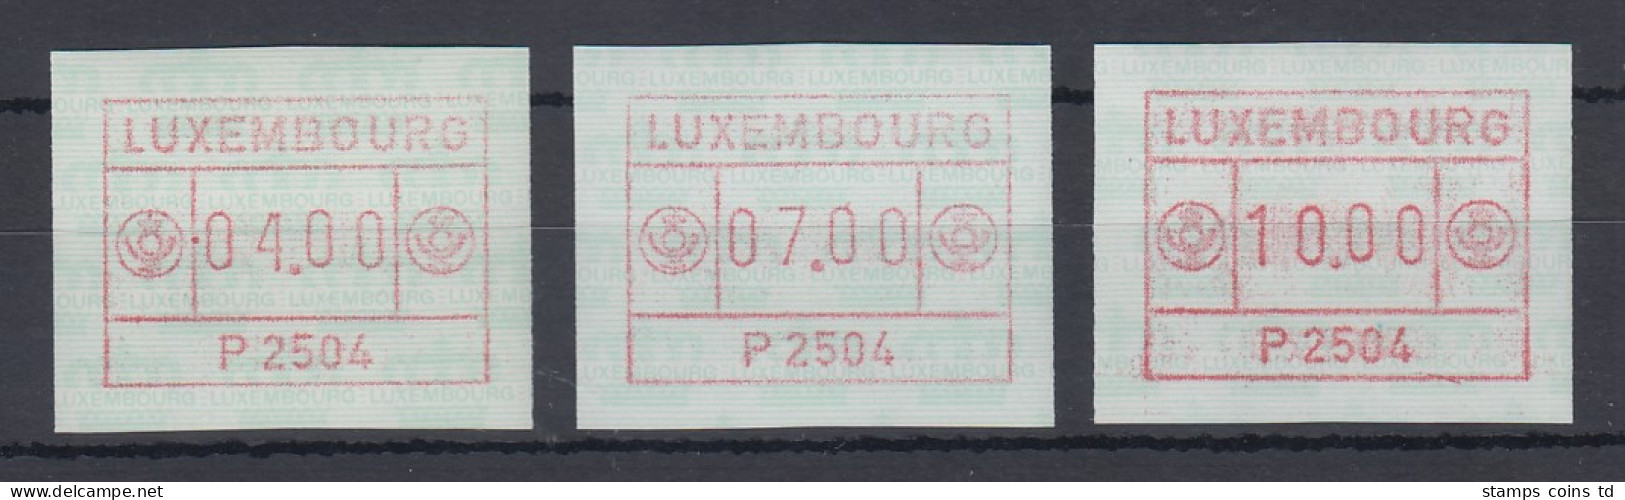 Luxemburg ATM P2504 Tastensatz 4-7-10 ** - Vignettes D'affranchissement